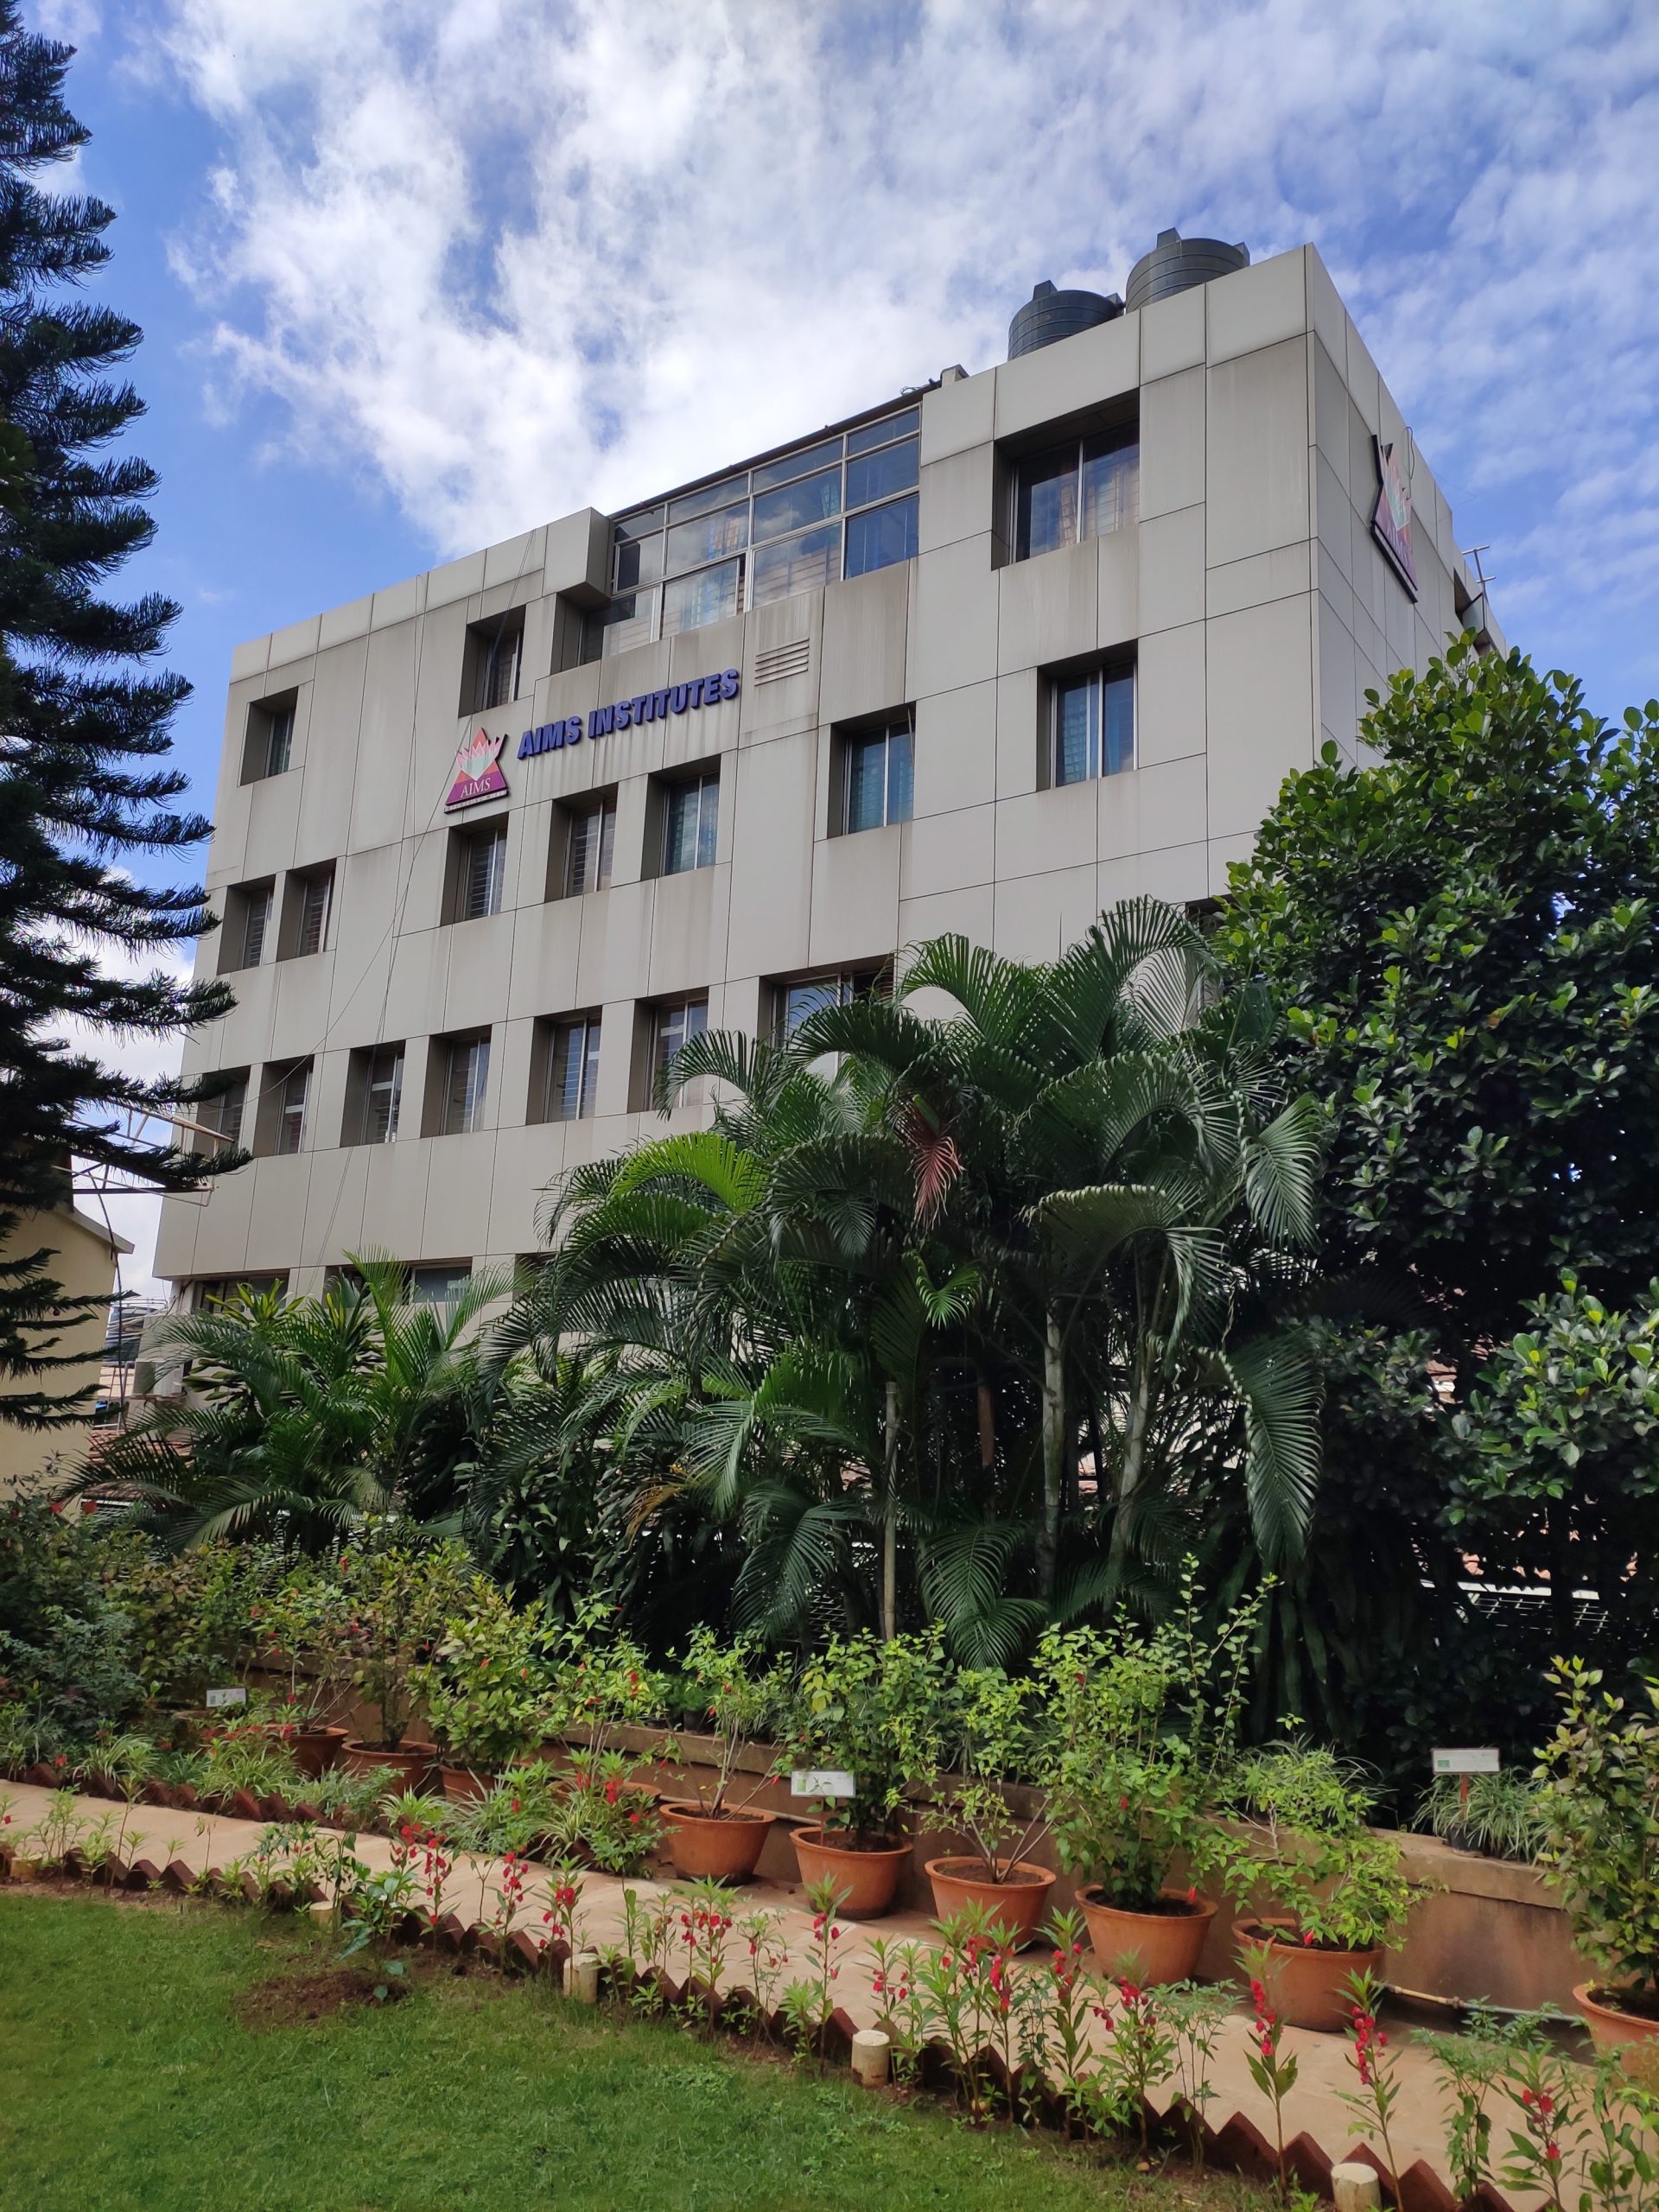 AIMS – Acharya Institute of Management Studies, Bangalore